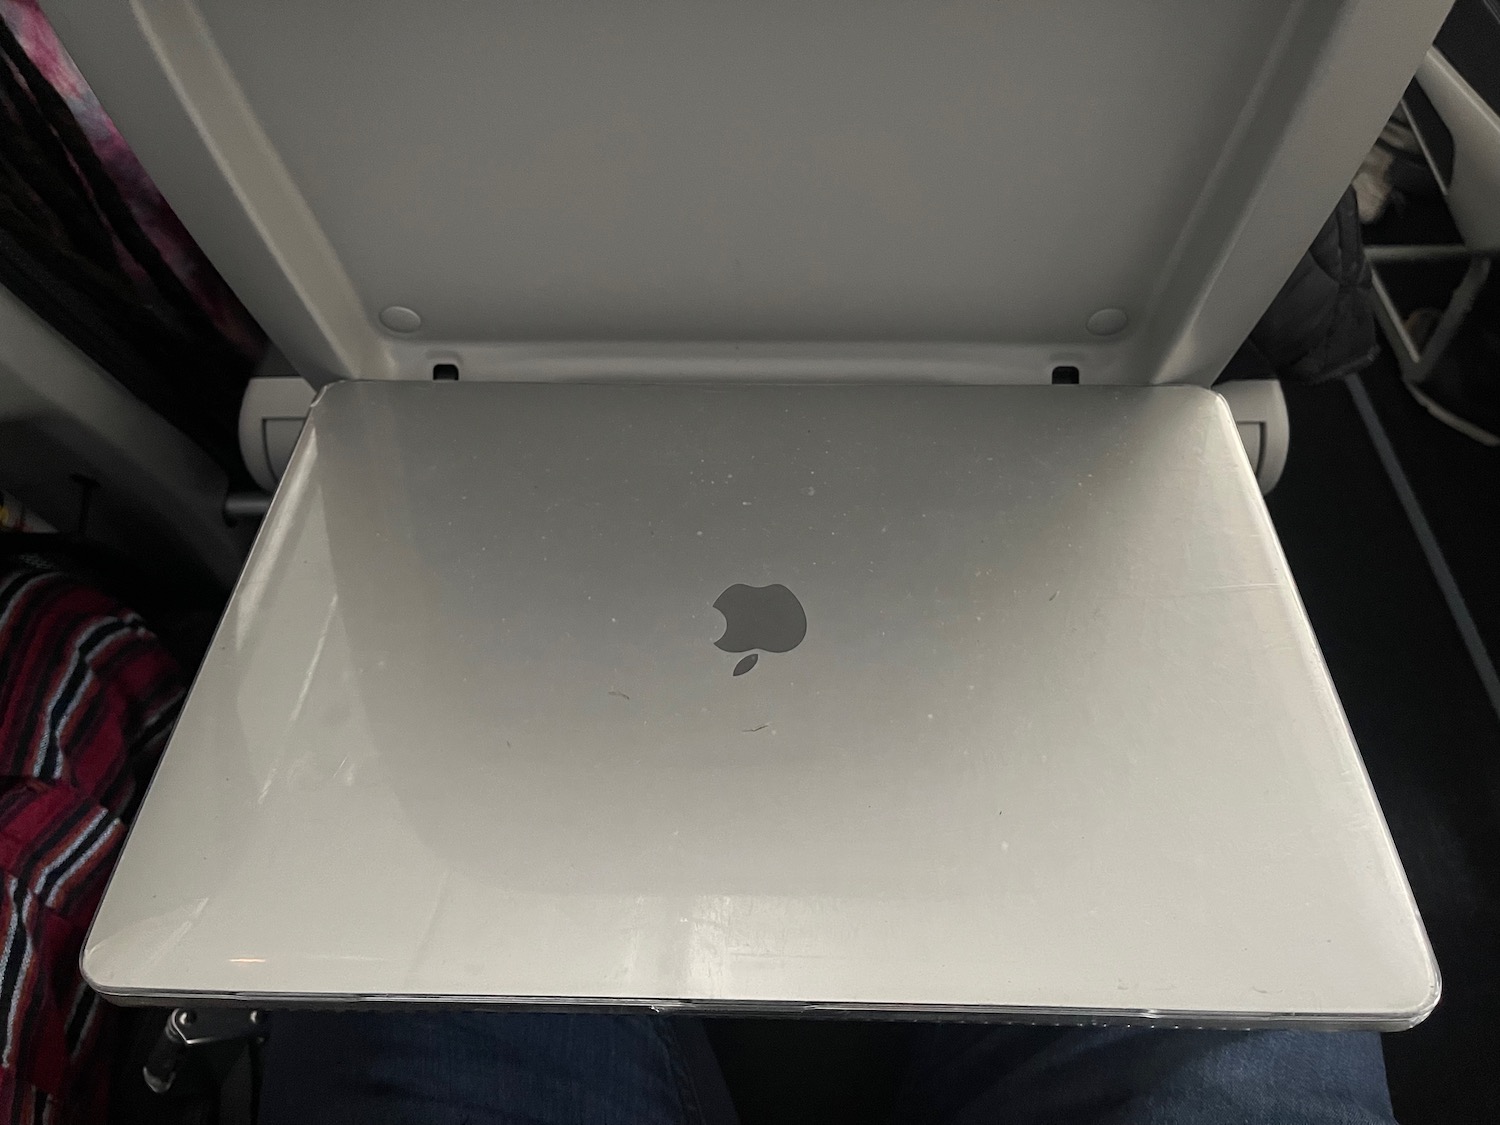 a laptop in a white box